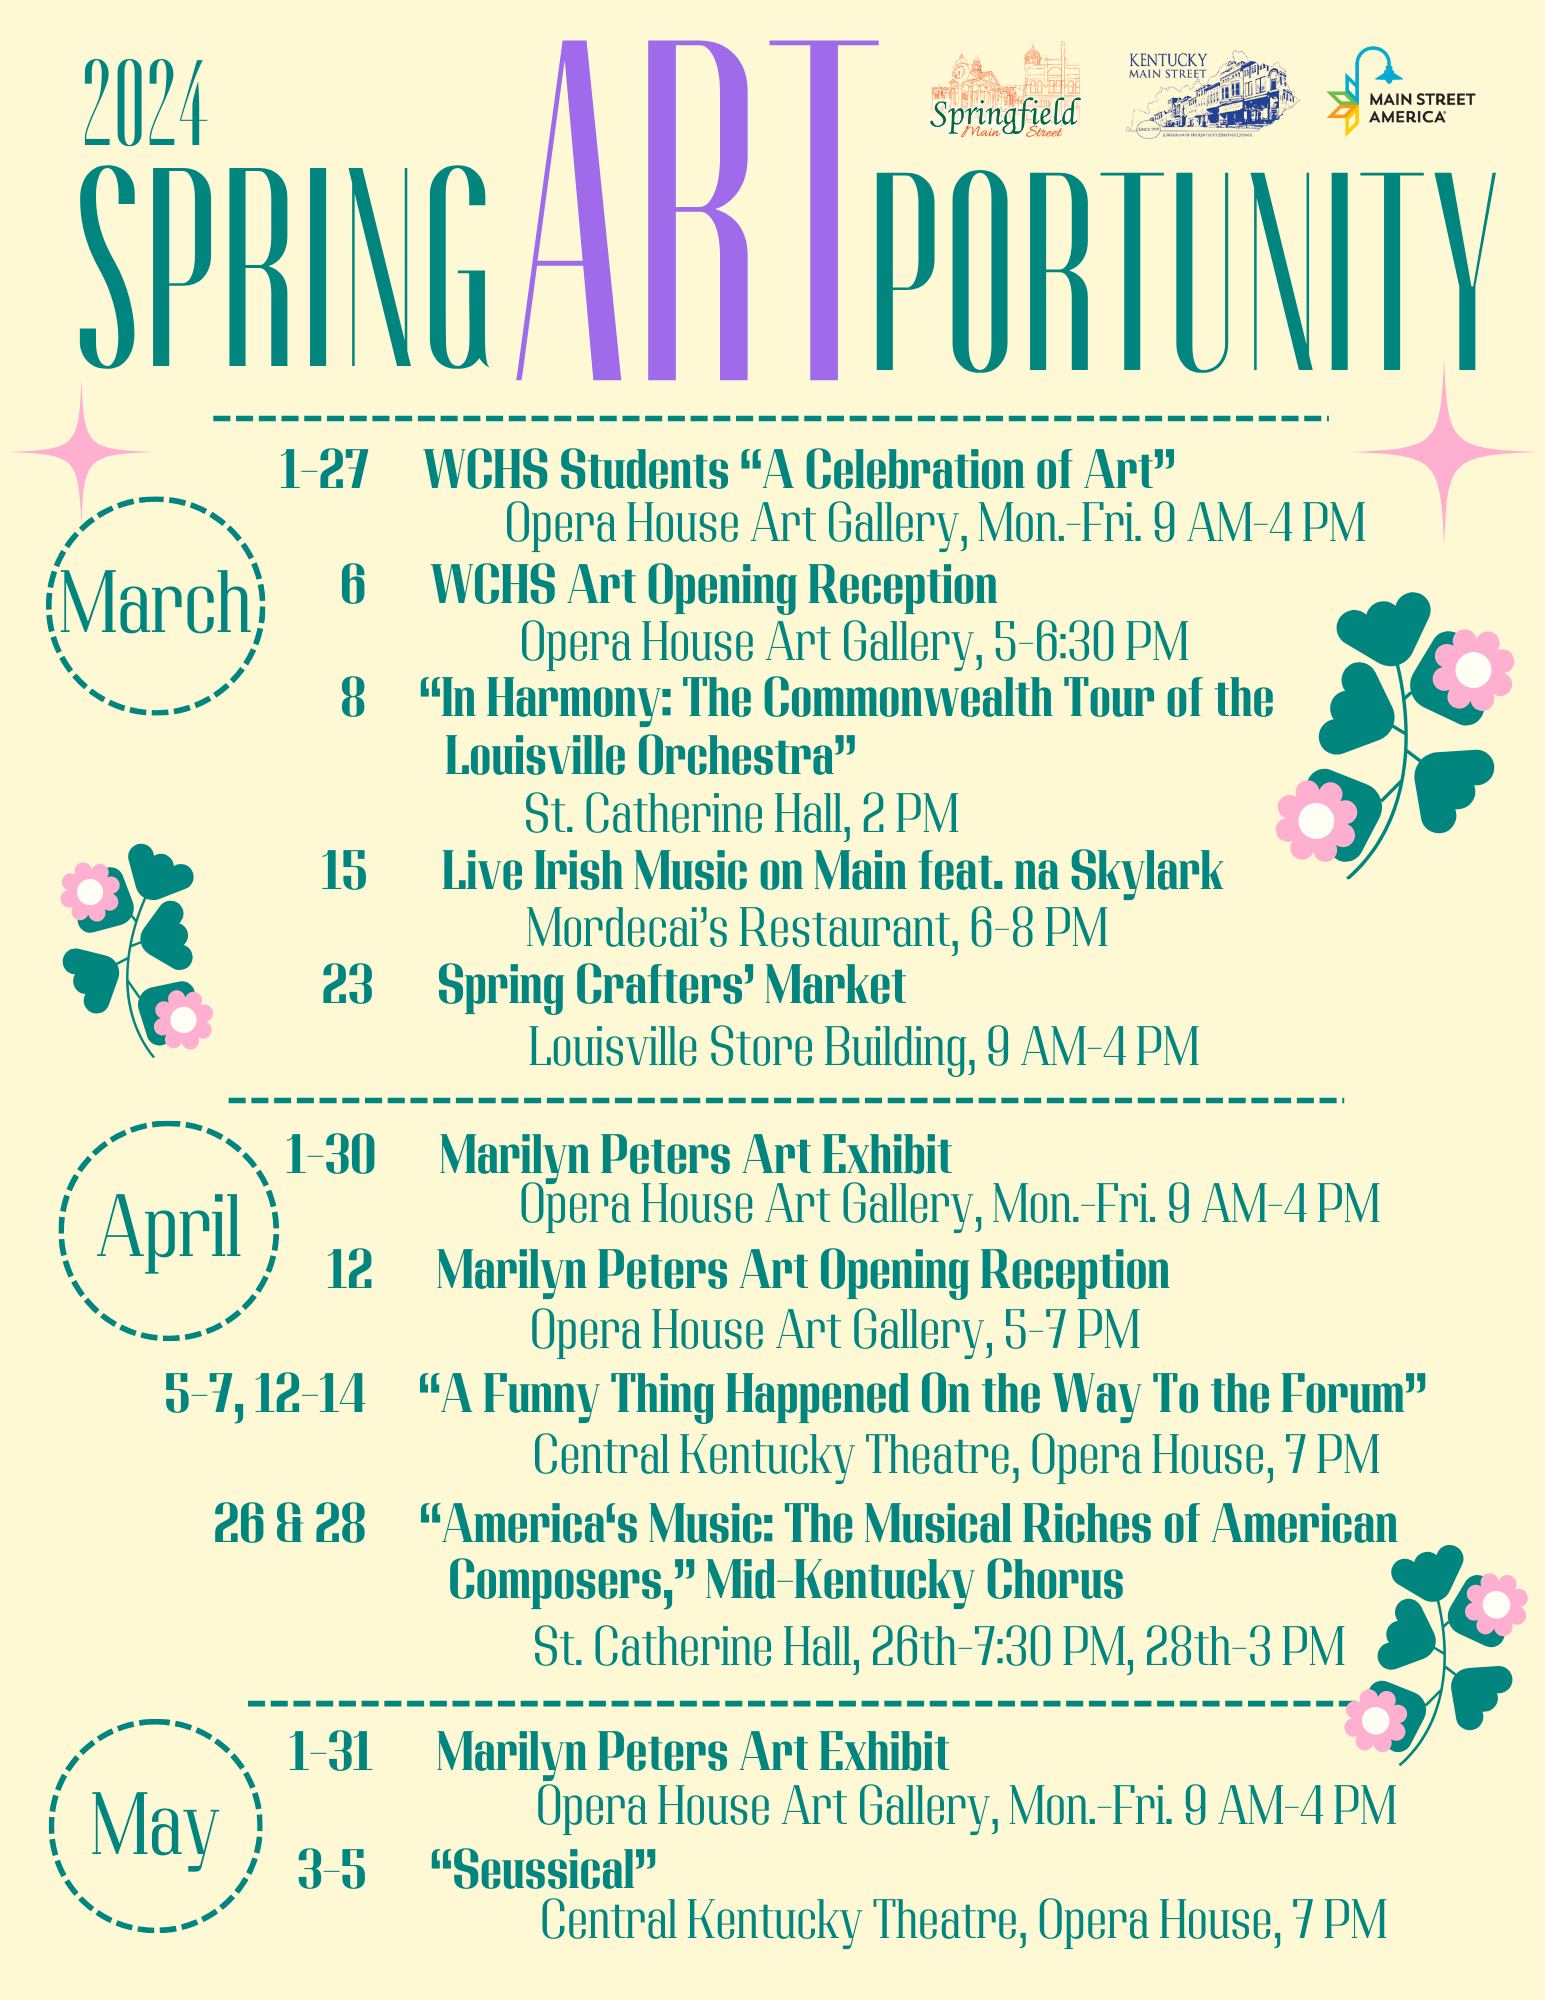 Spring Art-Portunity in Springfield